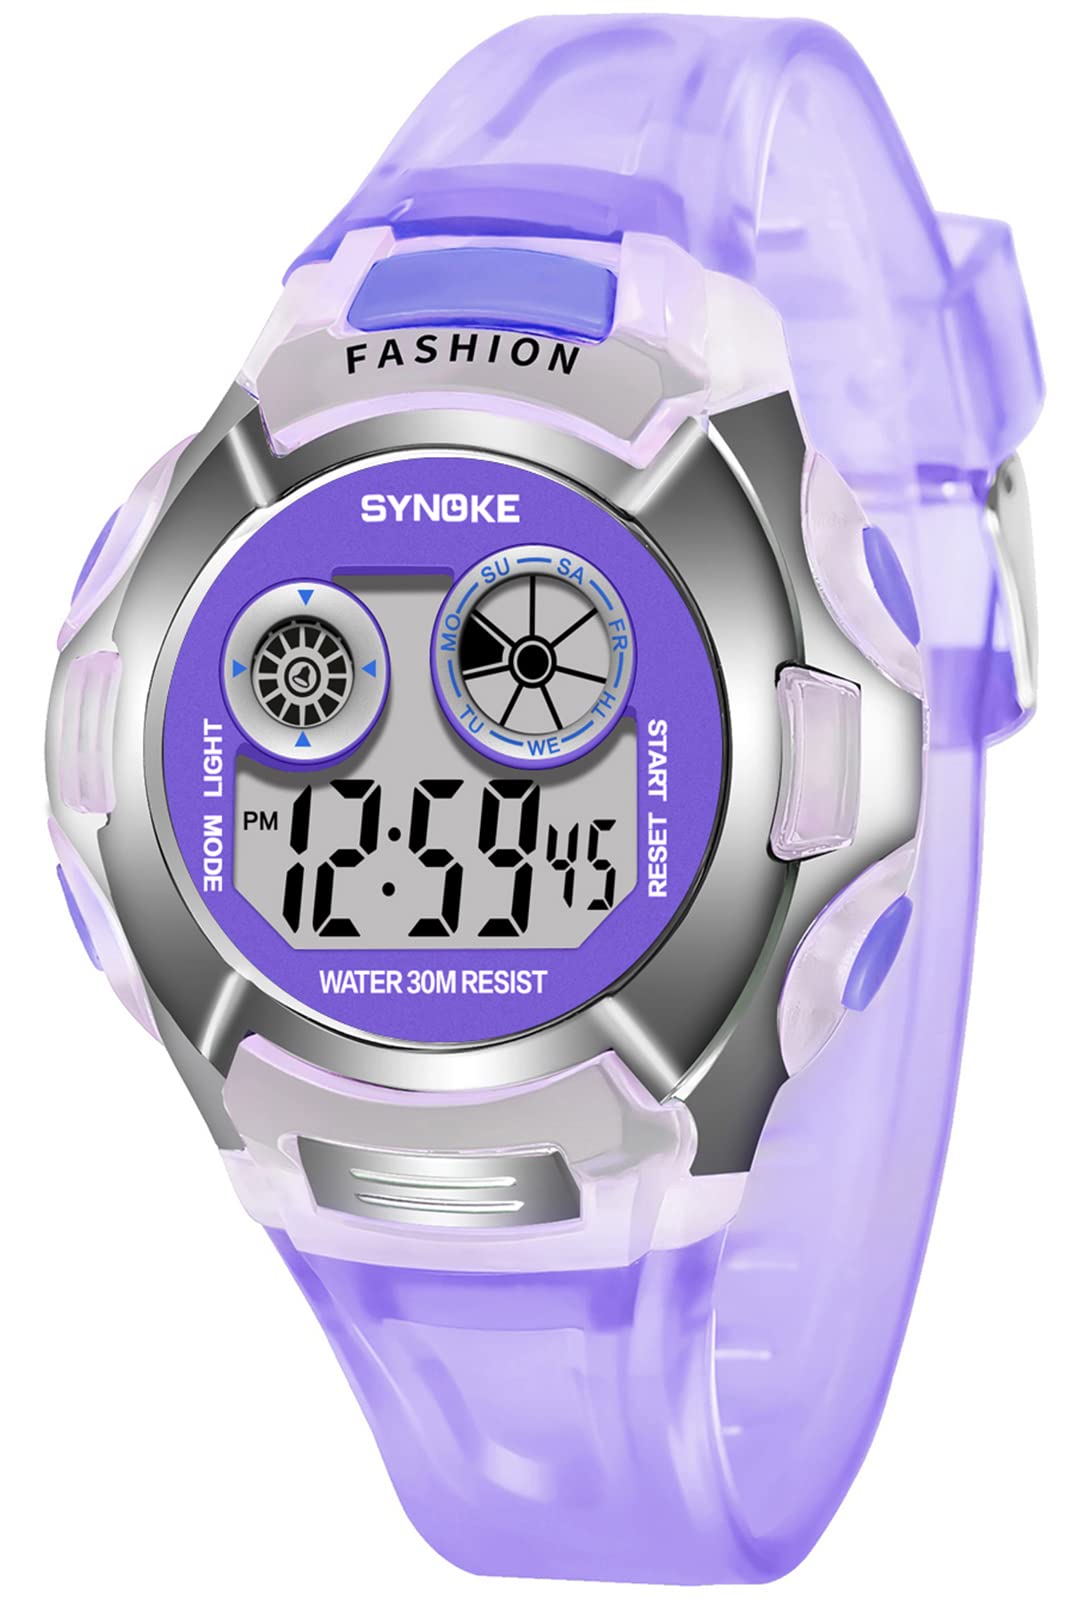 KINGNUOS Fashion Outdoor Sports Watches Digital Watch Ultra Light Small Watch Waterproof LED Student Electronic Wrist Watch